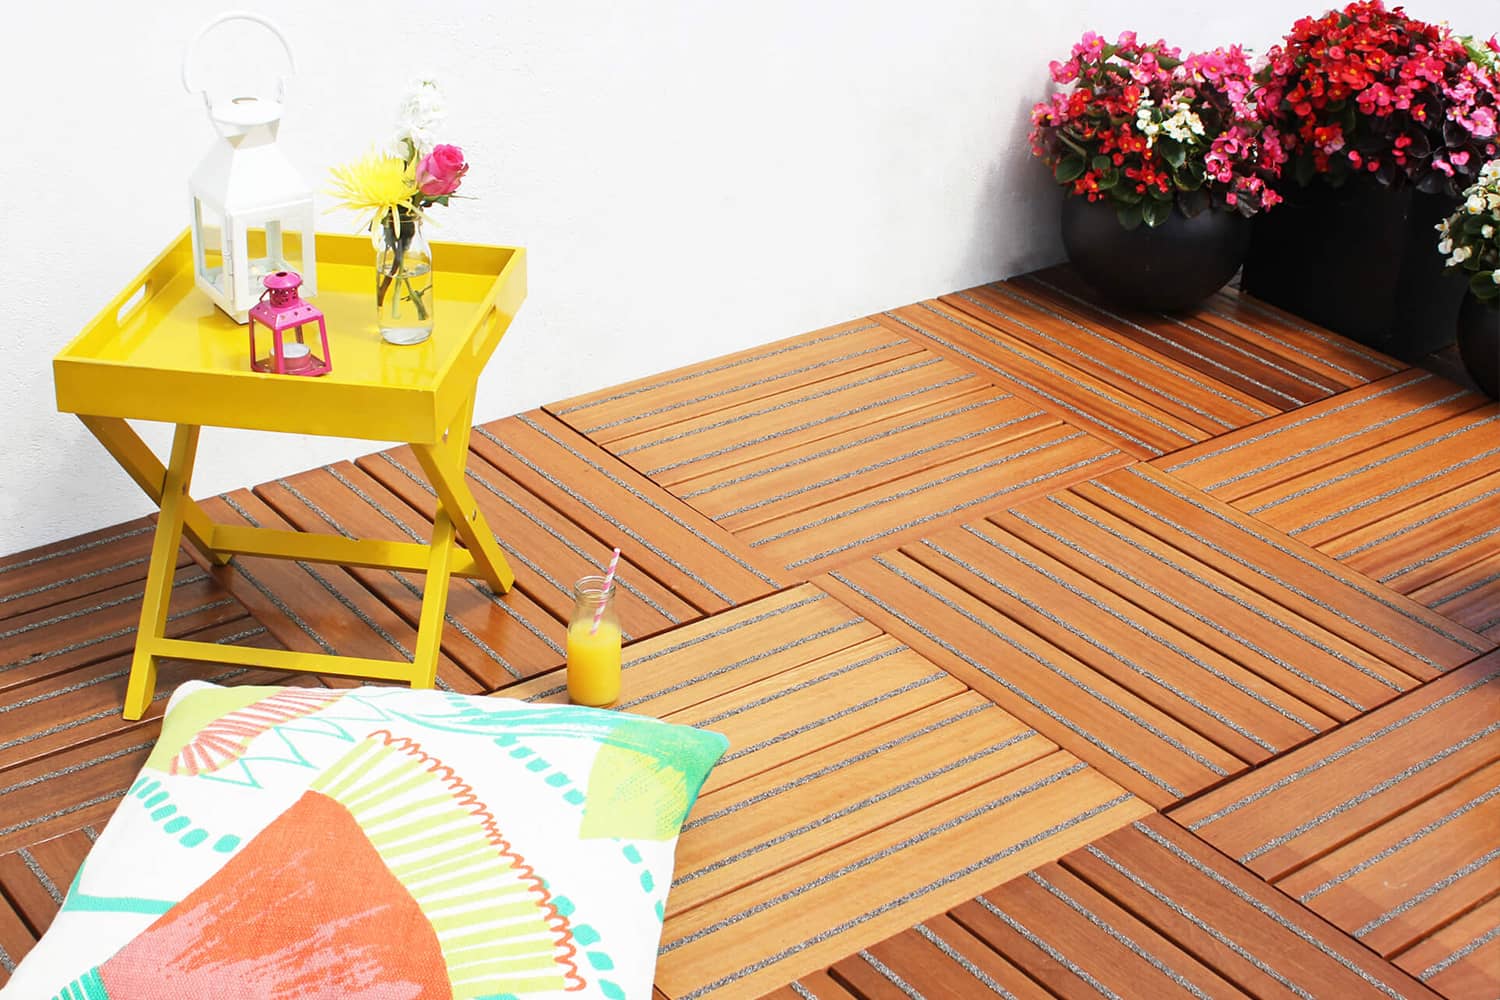 Colourful garden furniture on hardwood non-slip decking tiles